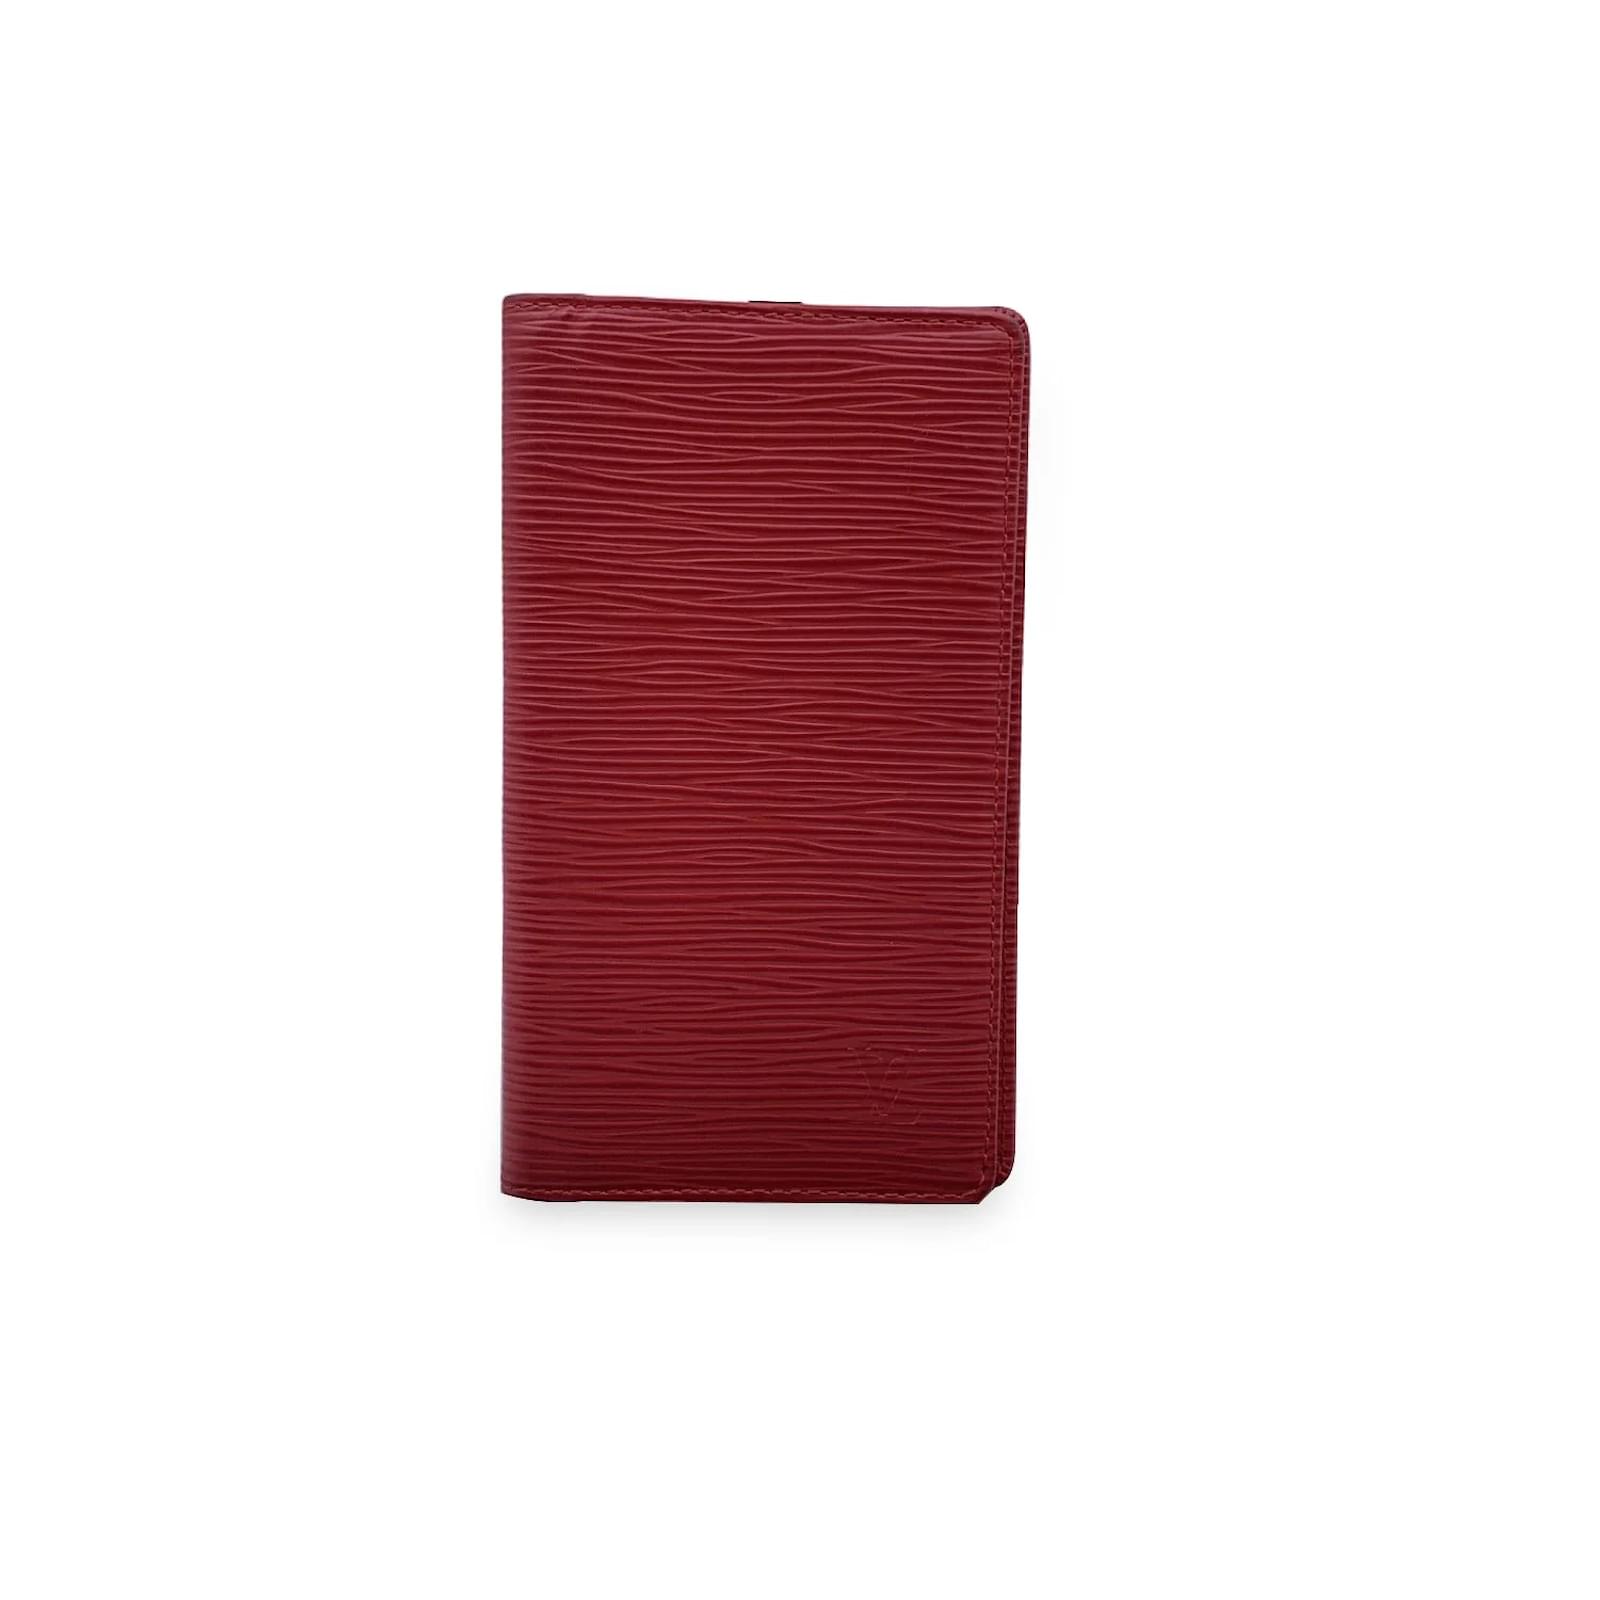 lv wallet red inside